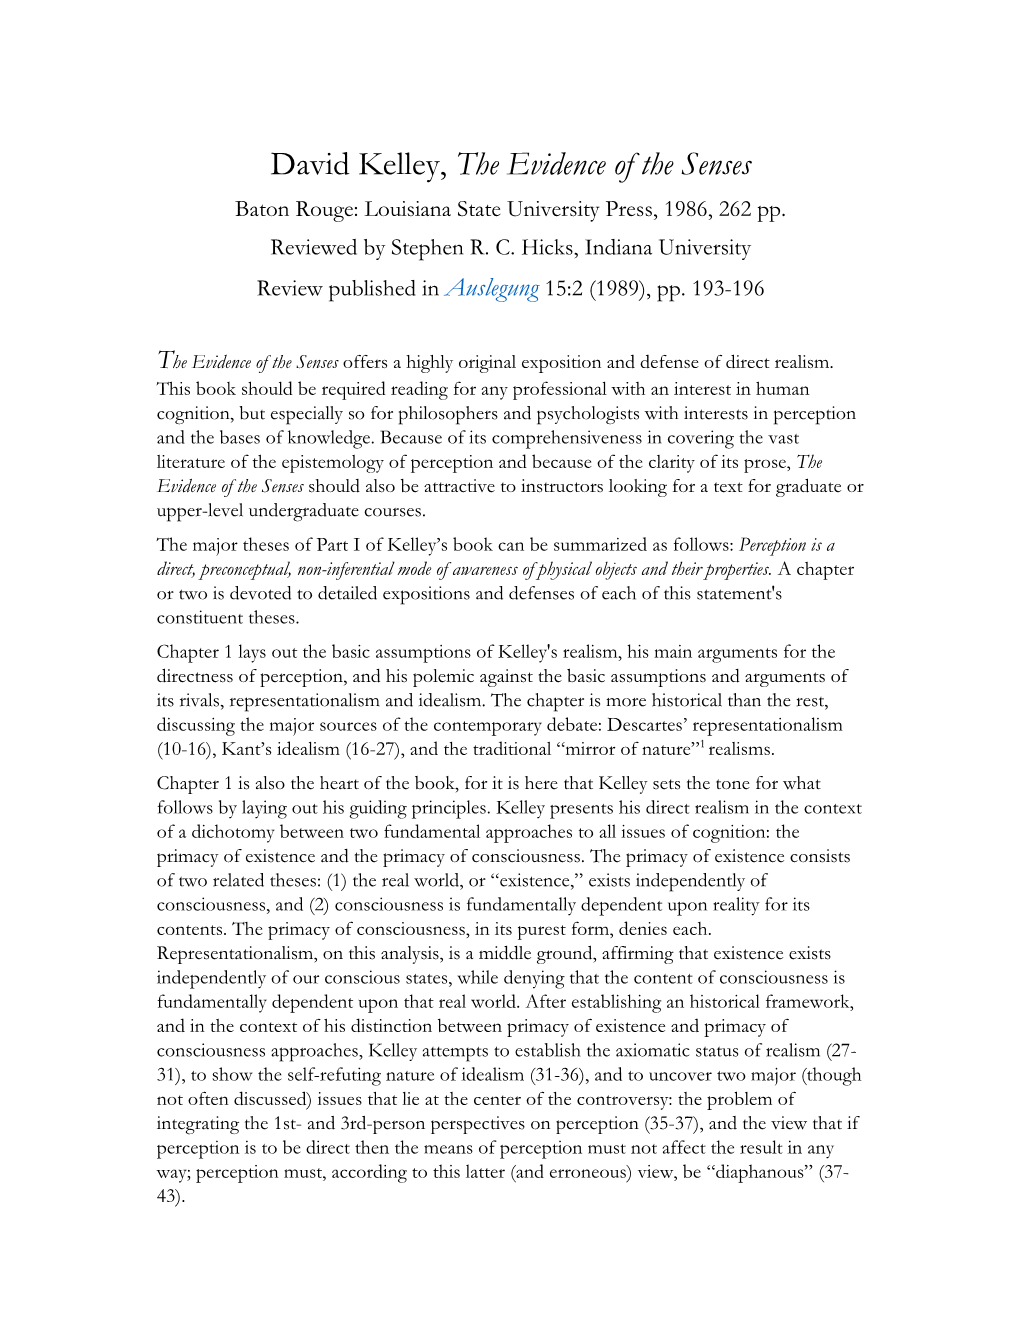 David Kelley, the Evidence of the Senses Baton Rouge: Louisiana State University Press, 1986, 262 Pp